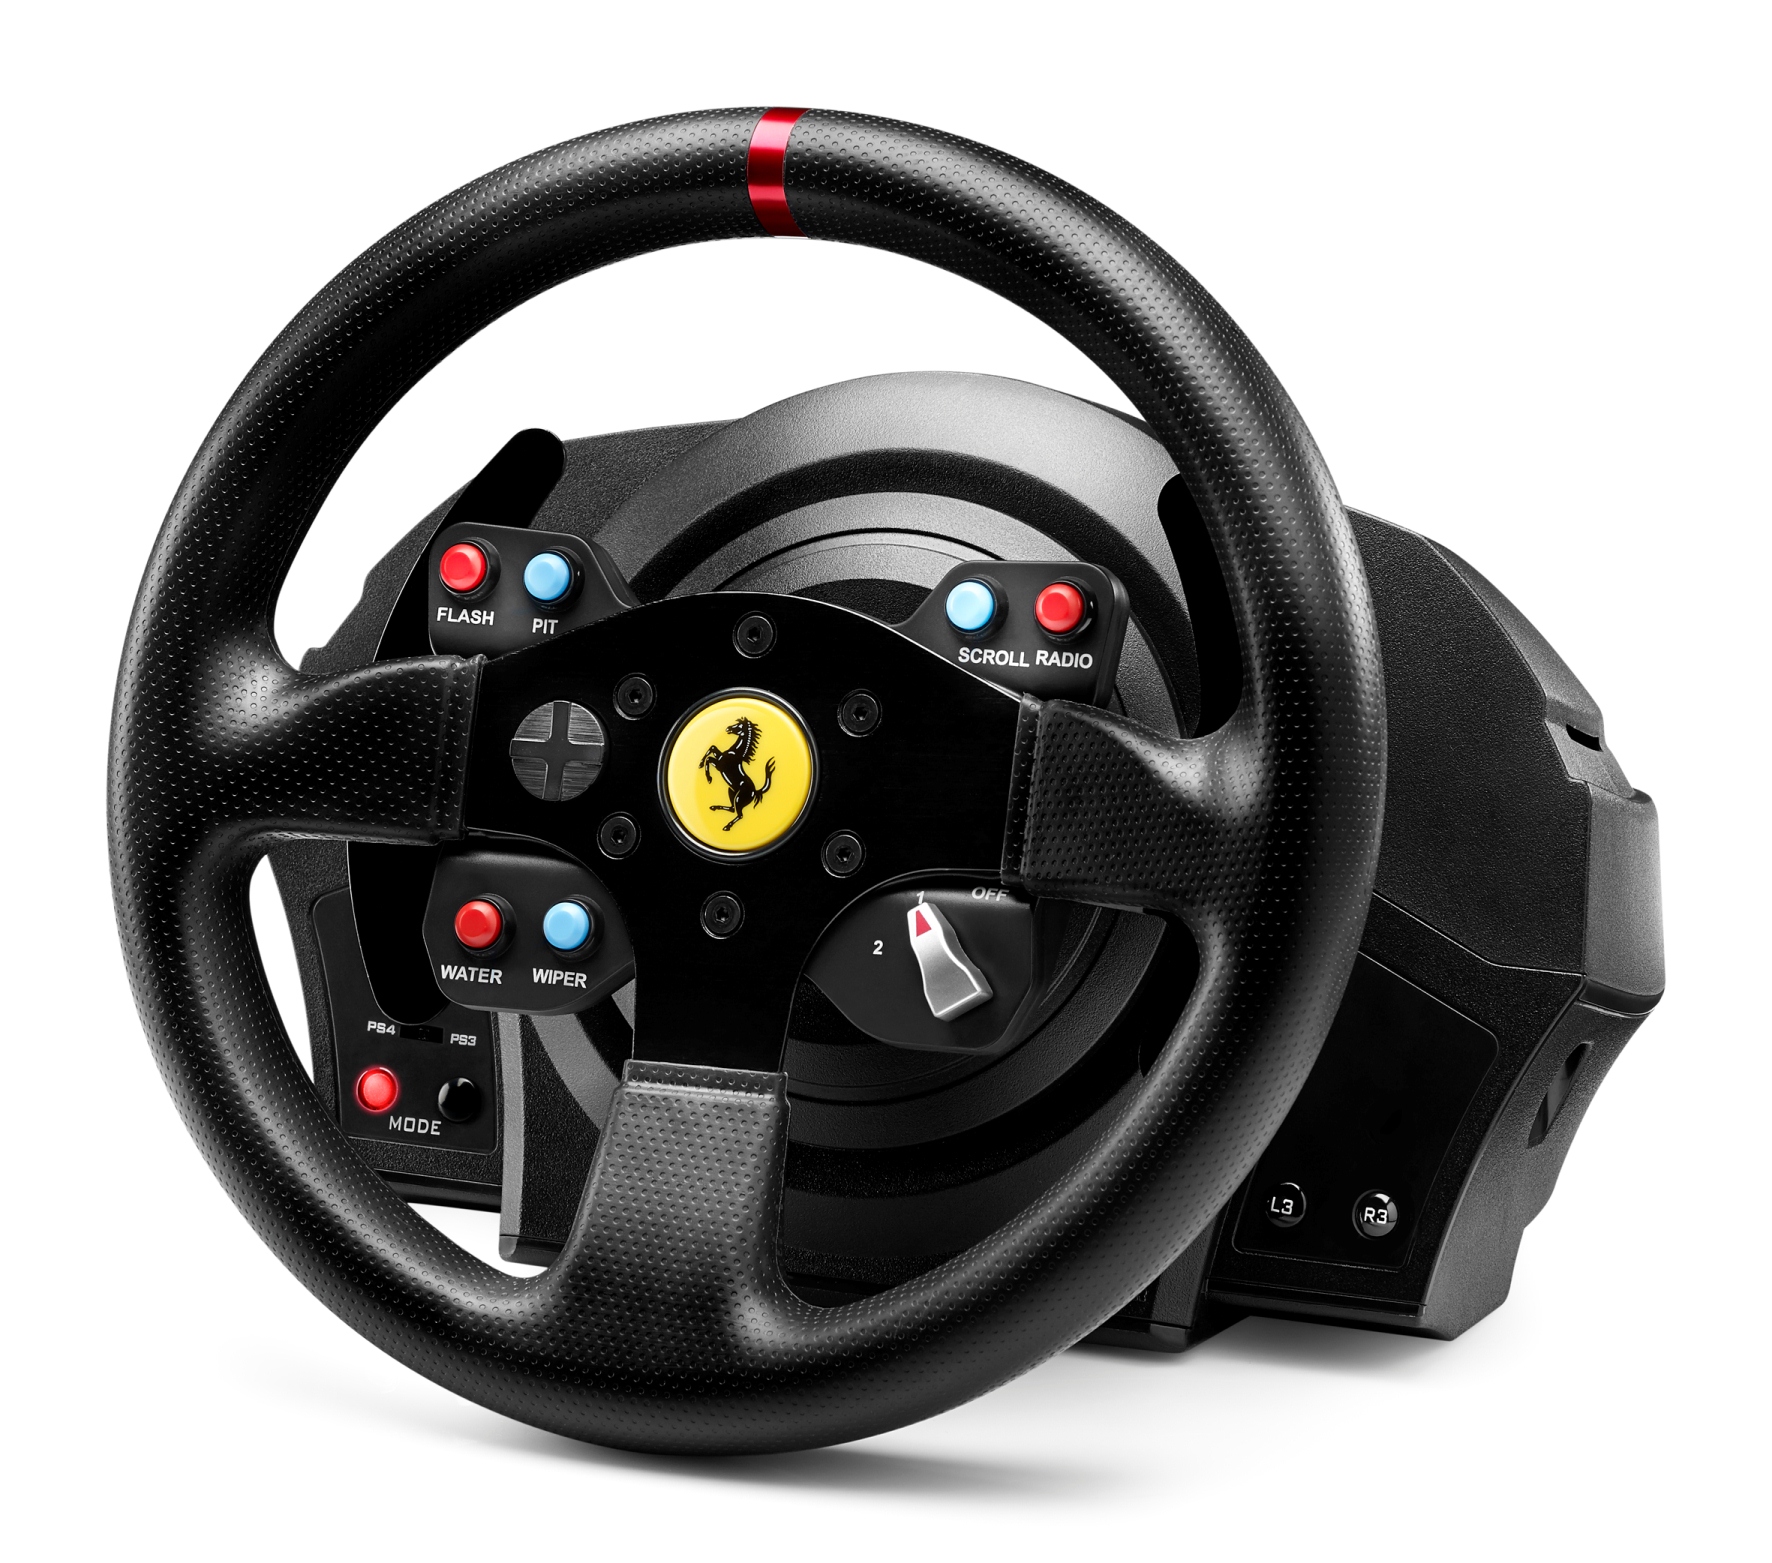 Thrustmaster T300 Ferrari GTE wheel revealed - Bsimracing